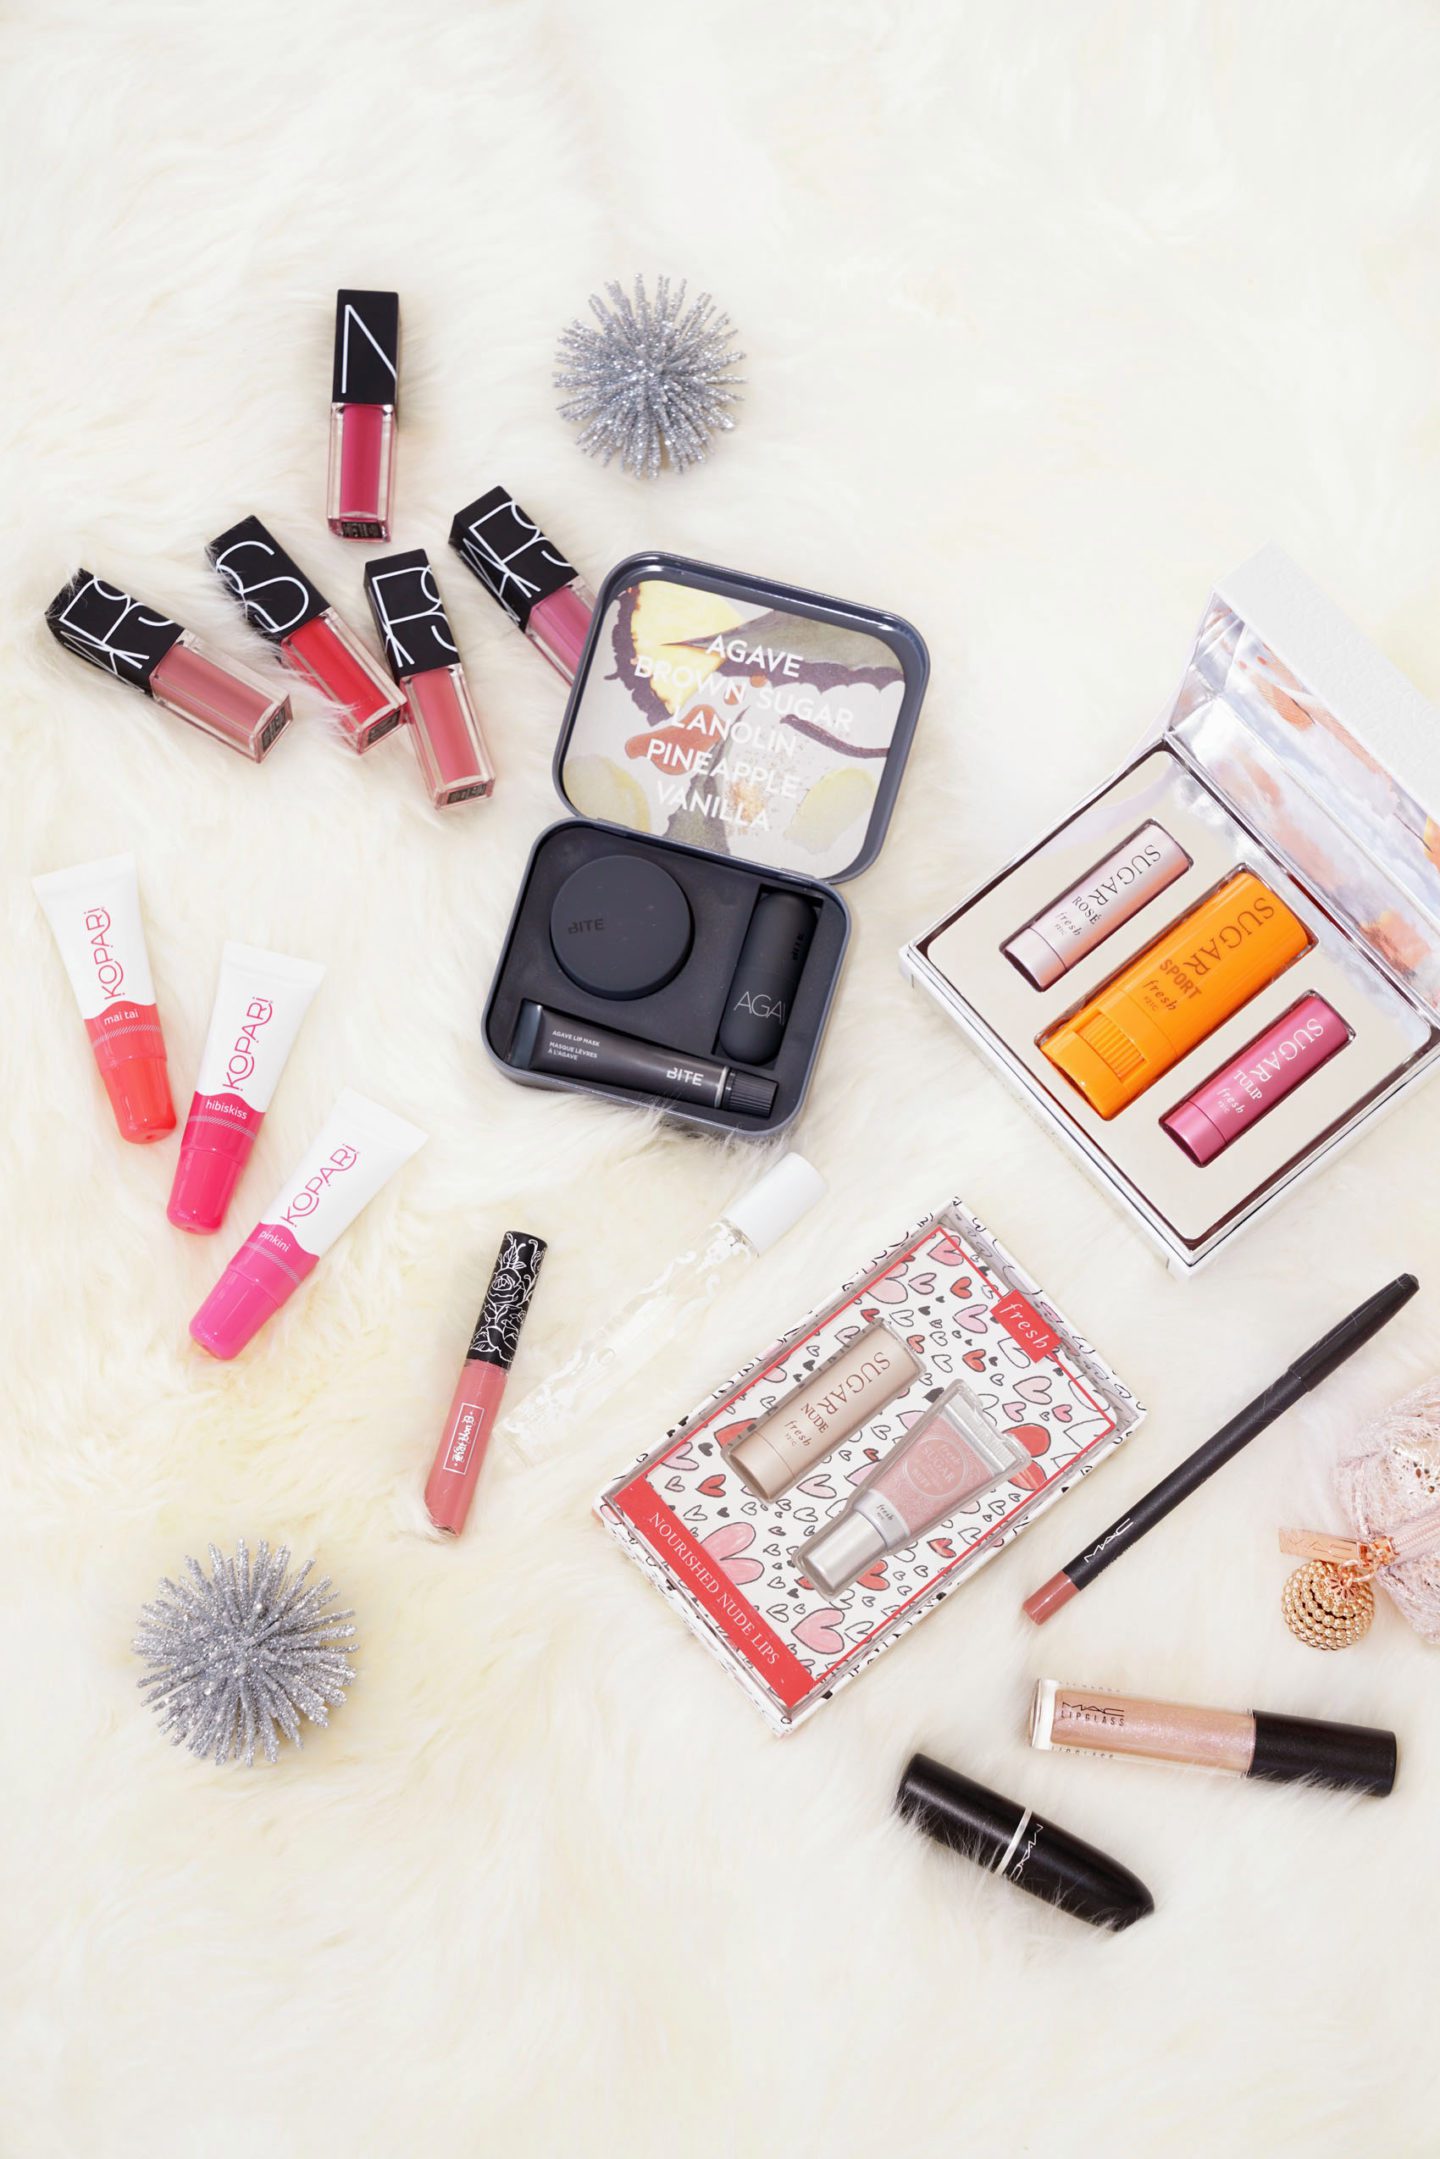 Lip Gift Sets Fresh, NARS, MAC, Kopari | The Beauty Look Book